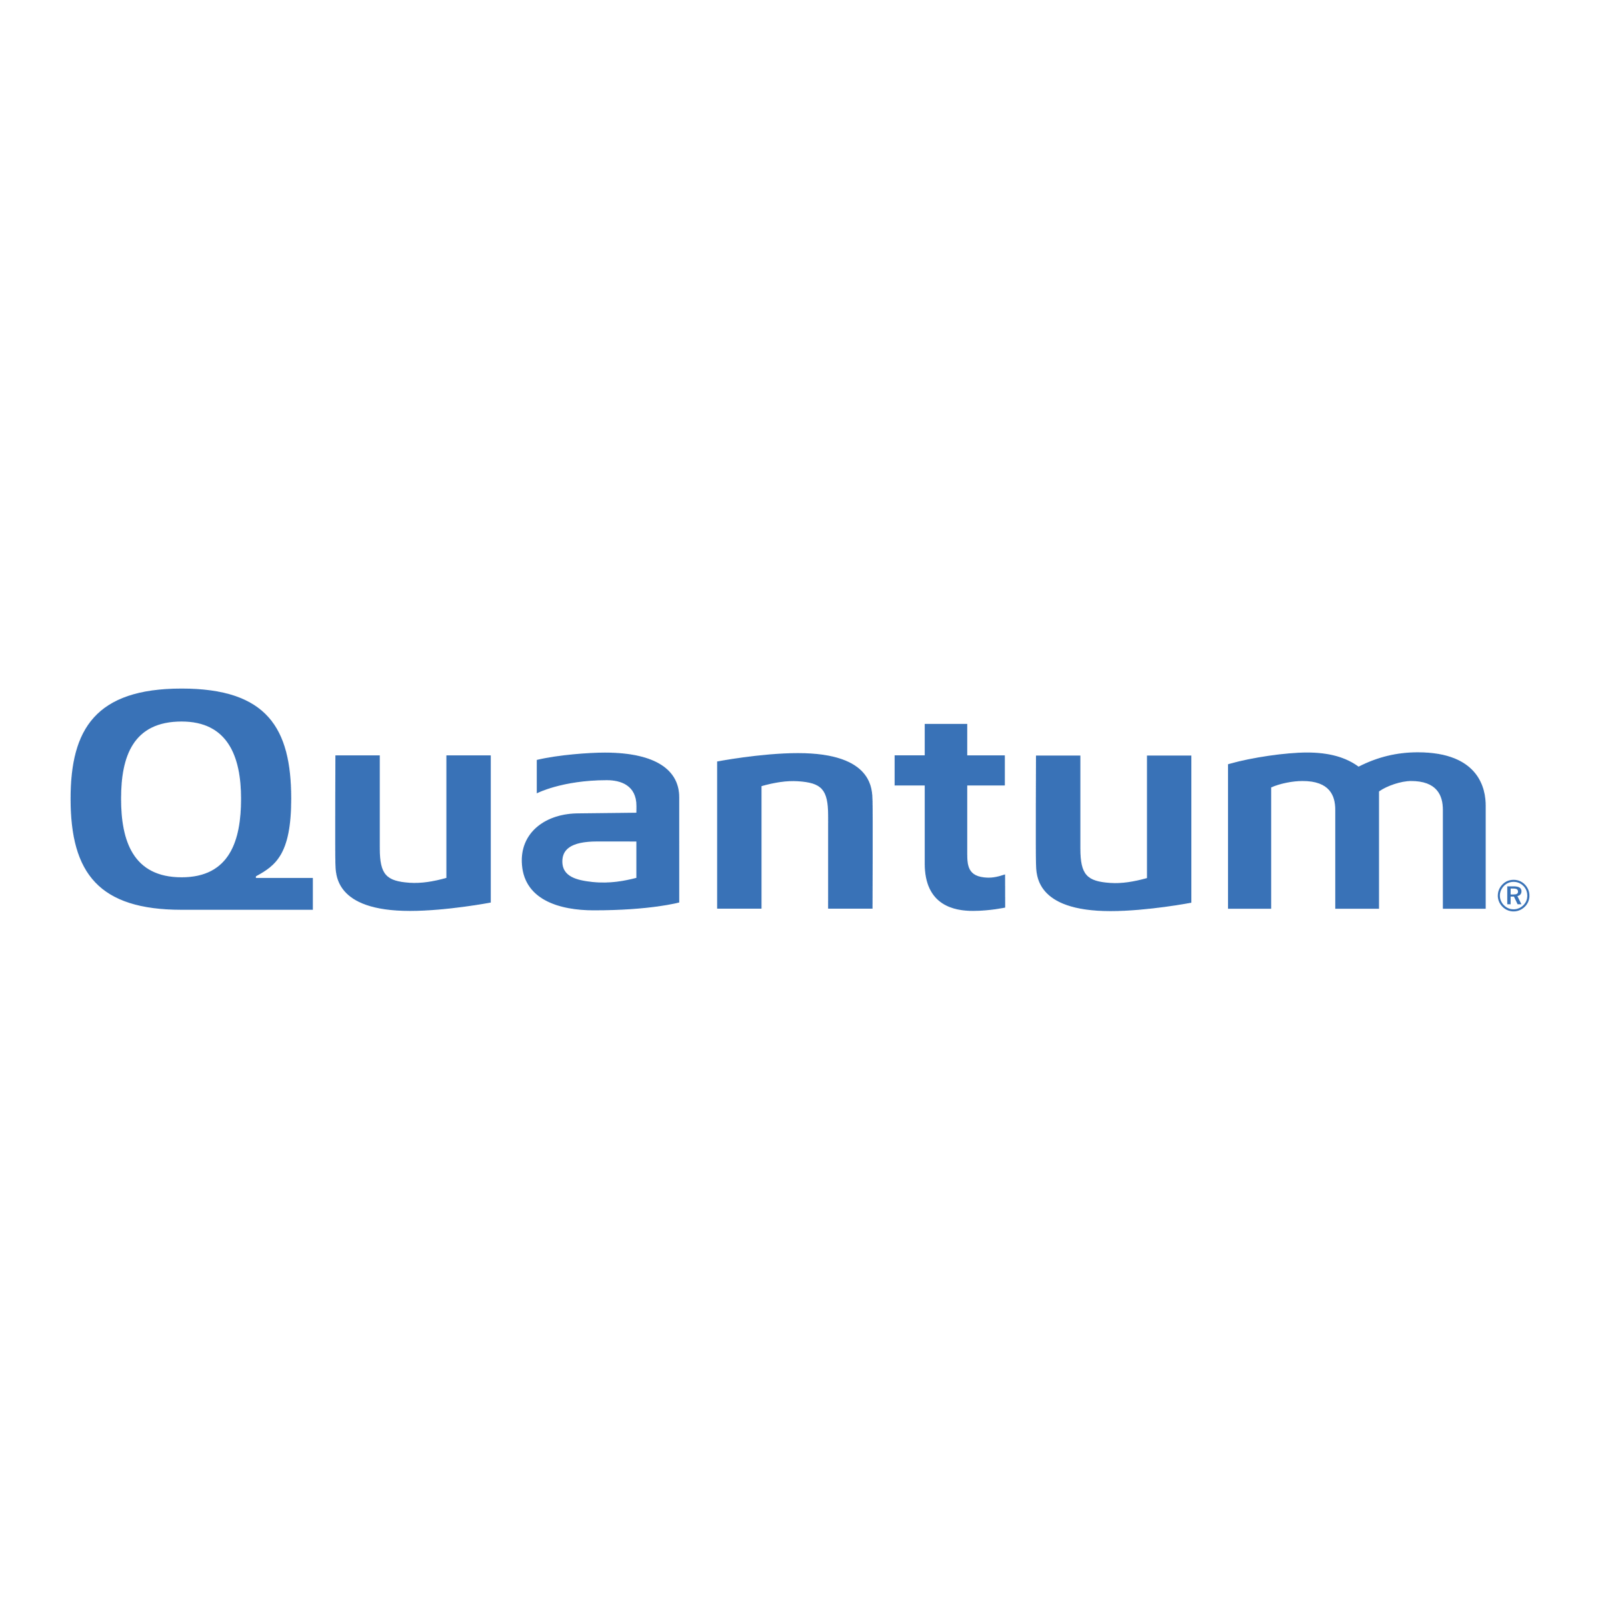 quantum logo png transparent